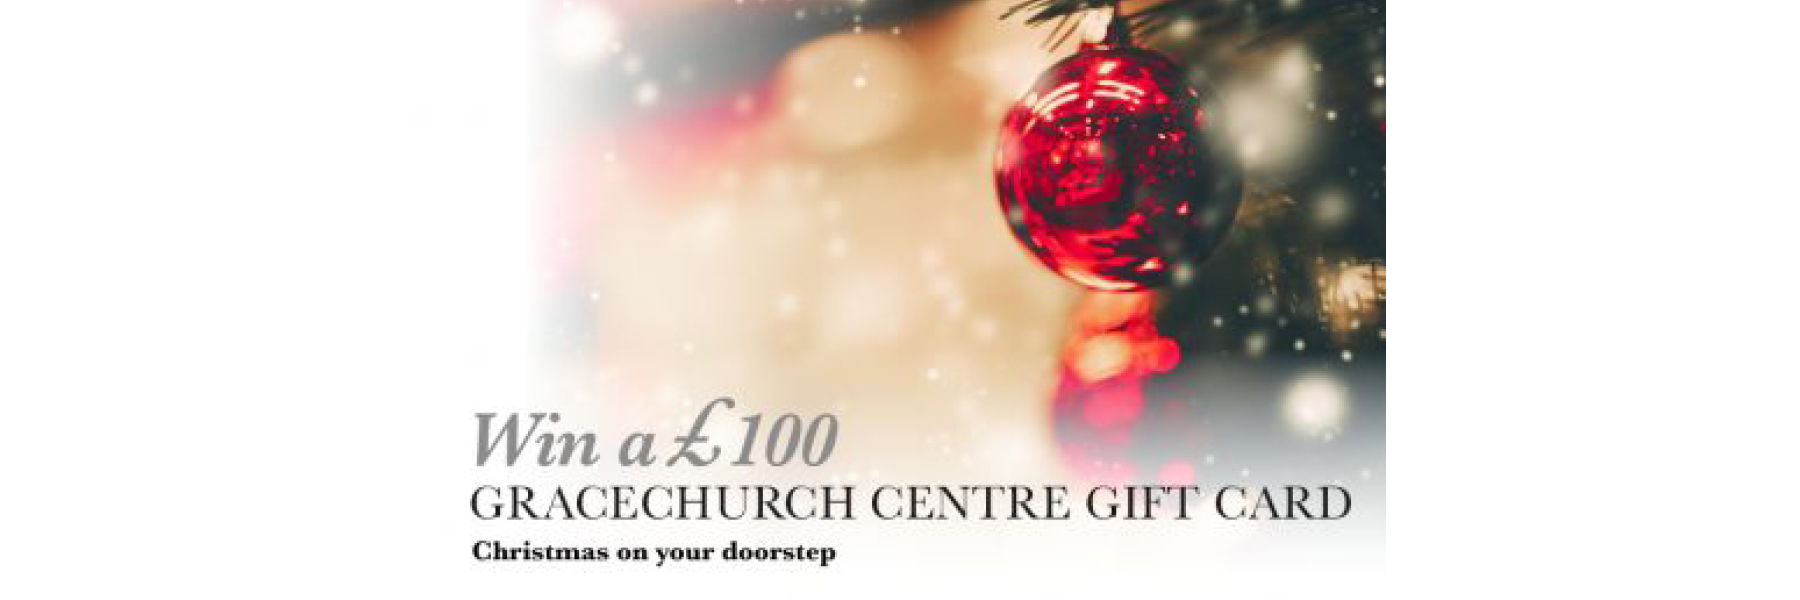 Win a £100 Gracechurch gift card